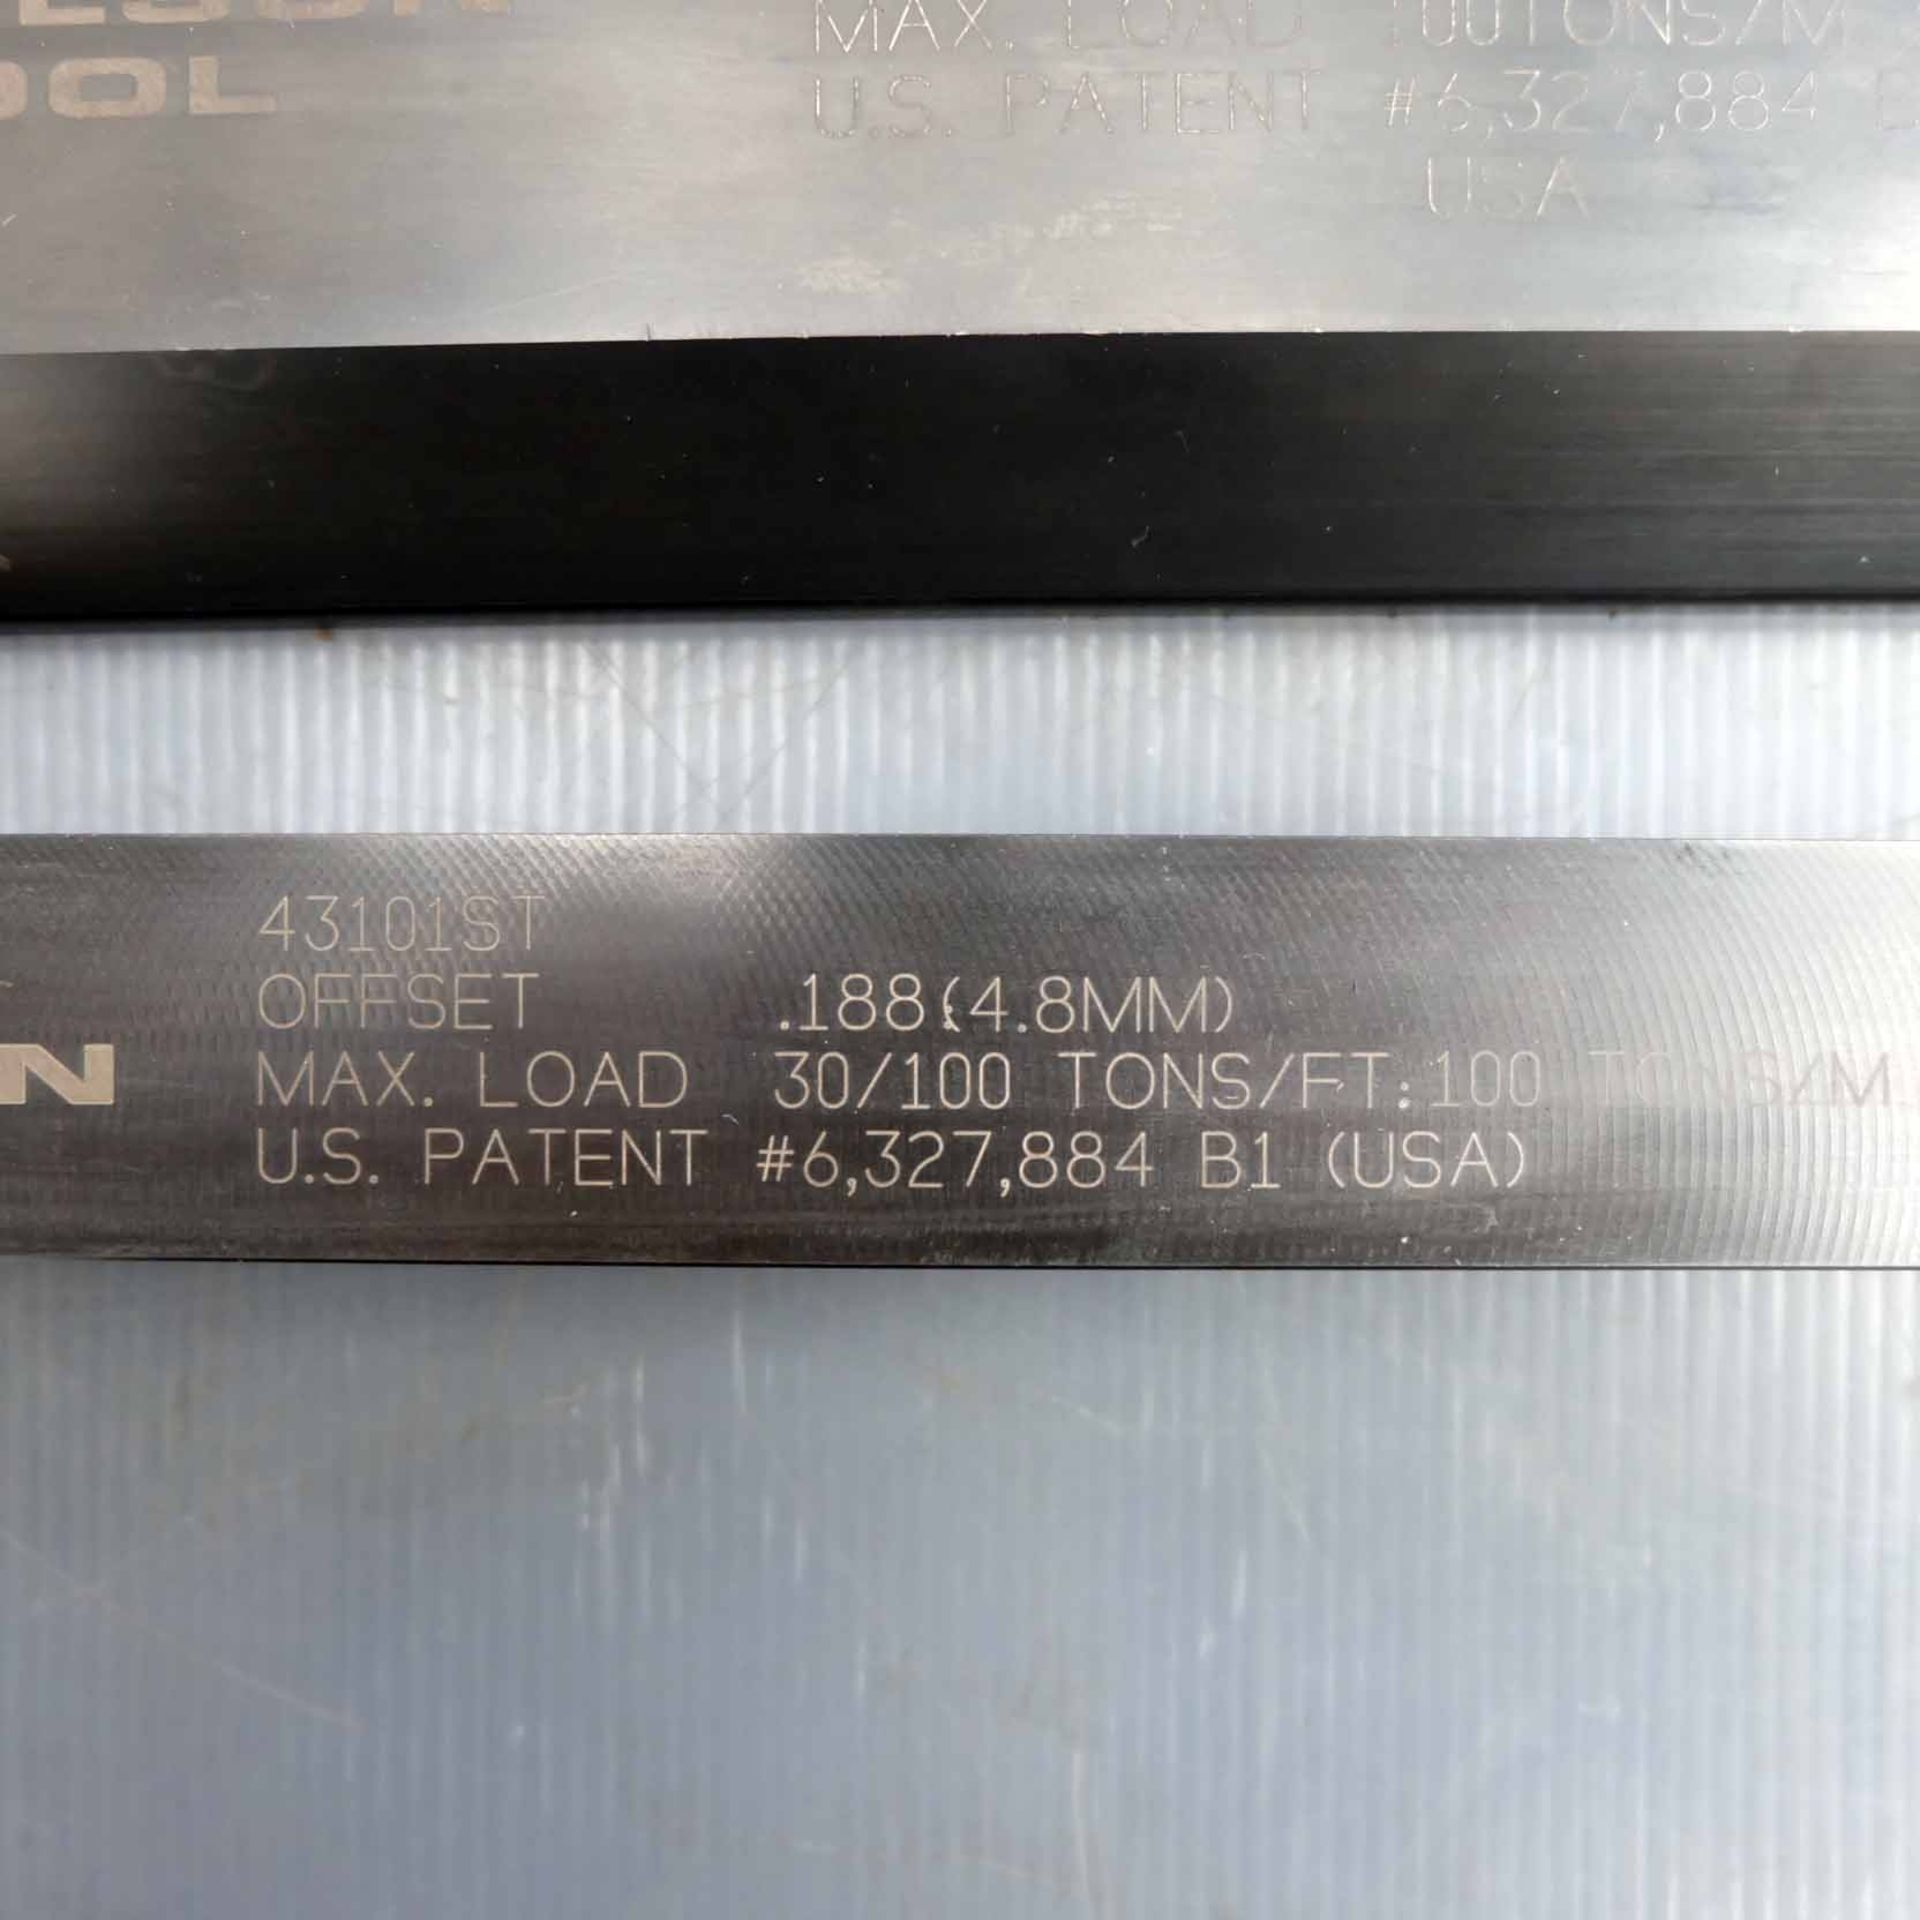 Wilson Tool USA Model 43101ST Offset 4.8mm Top & Bottom Press Brake Tooling. 415mm Long. Top Tool 90 - Image 4 of 9